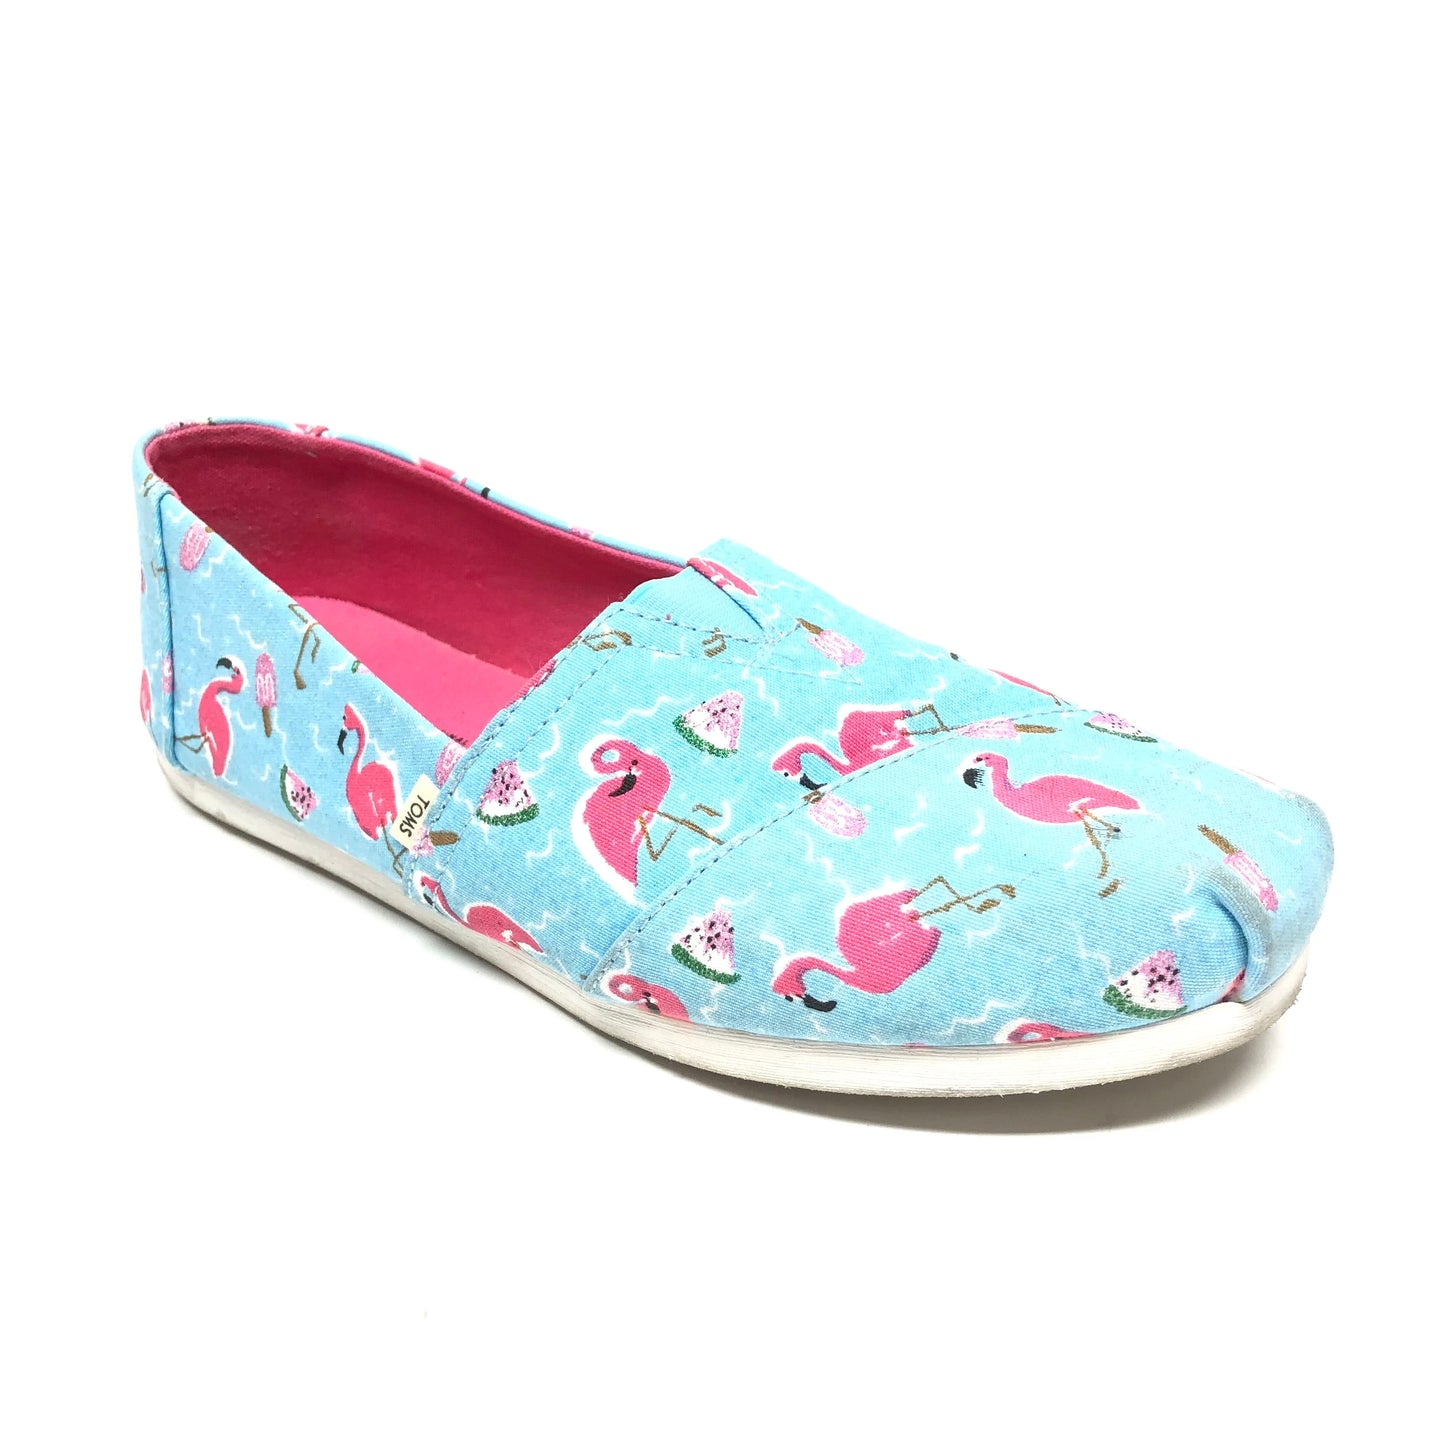 Blue & Pink Shoes Flats Toms, Size 9